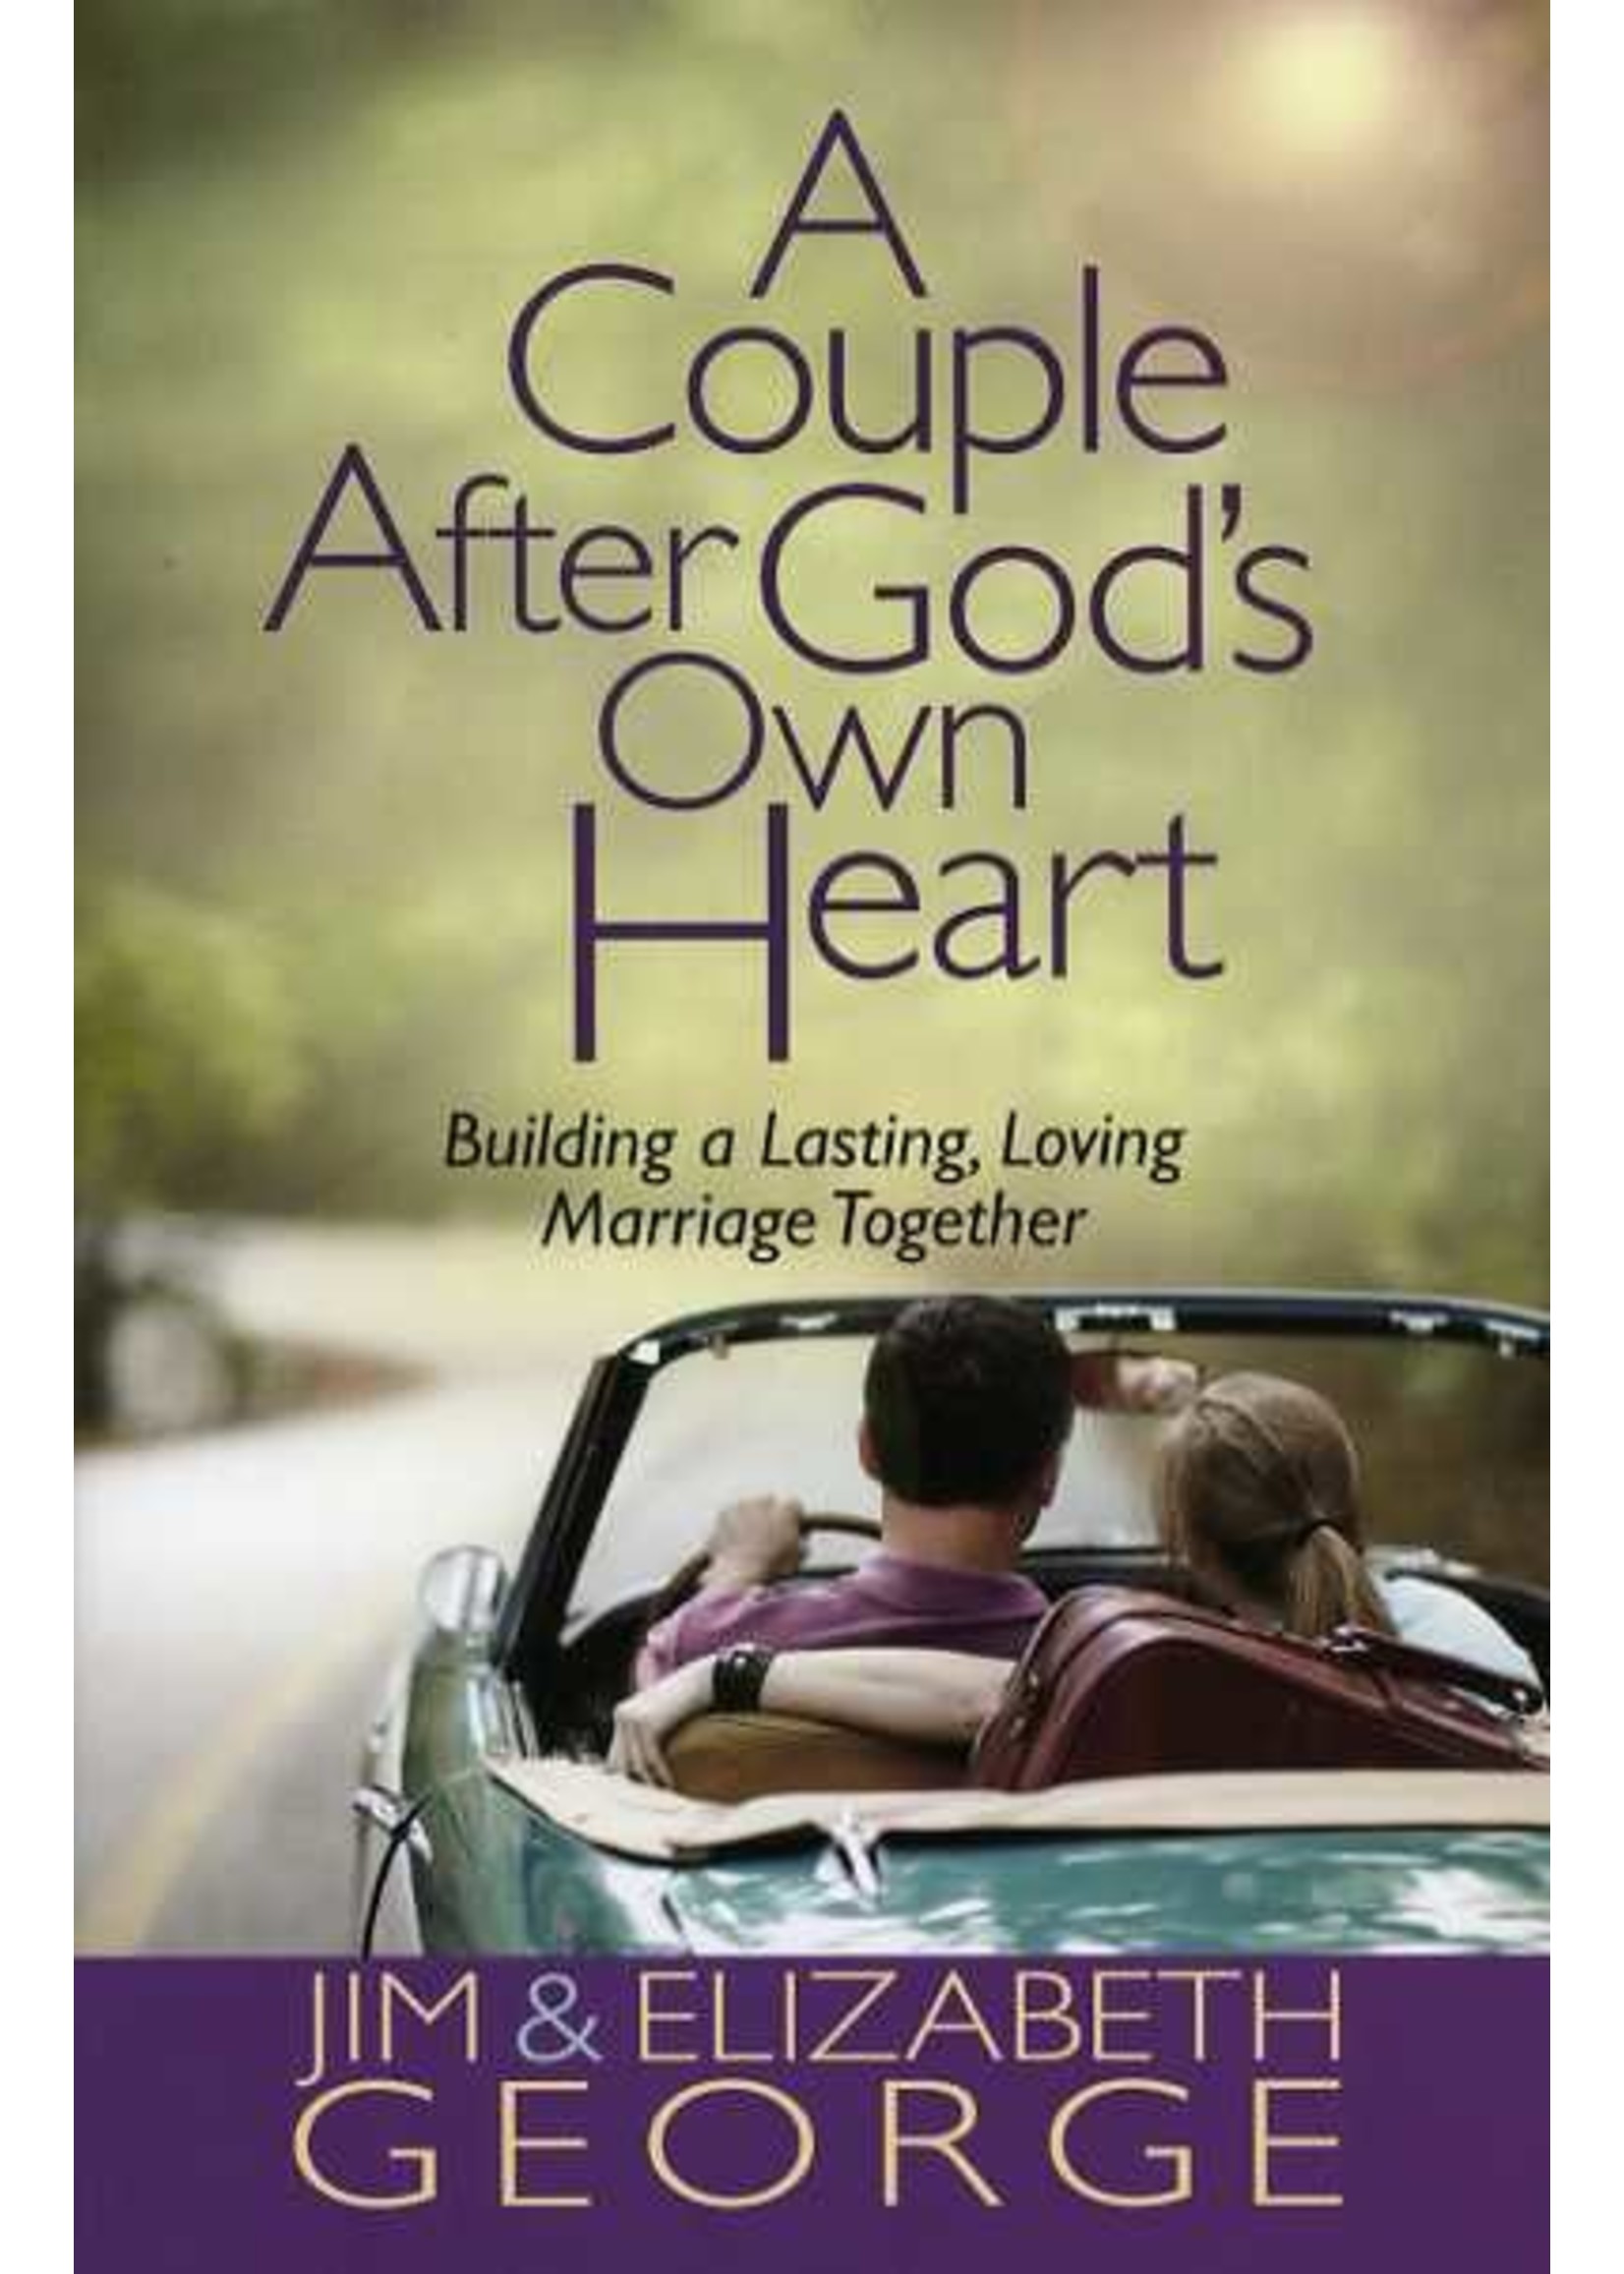 Harvest House A Couple After God's Own Heart - Jim & Elizabeth Elliot